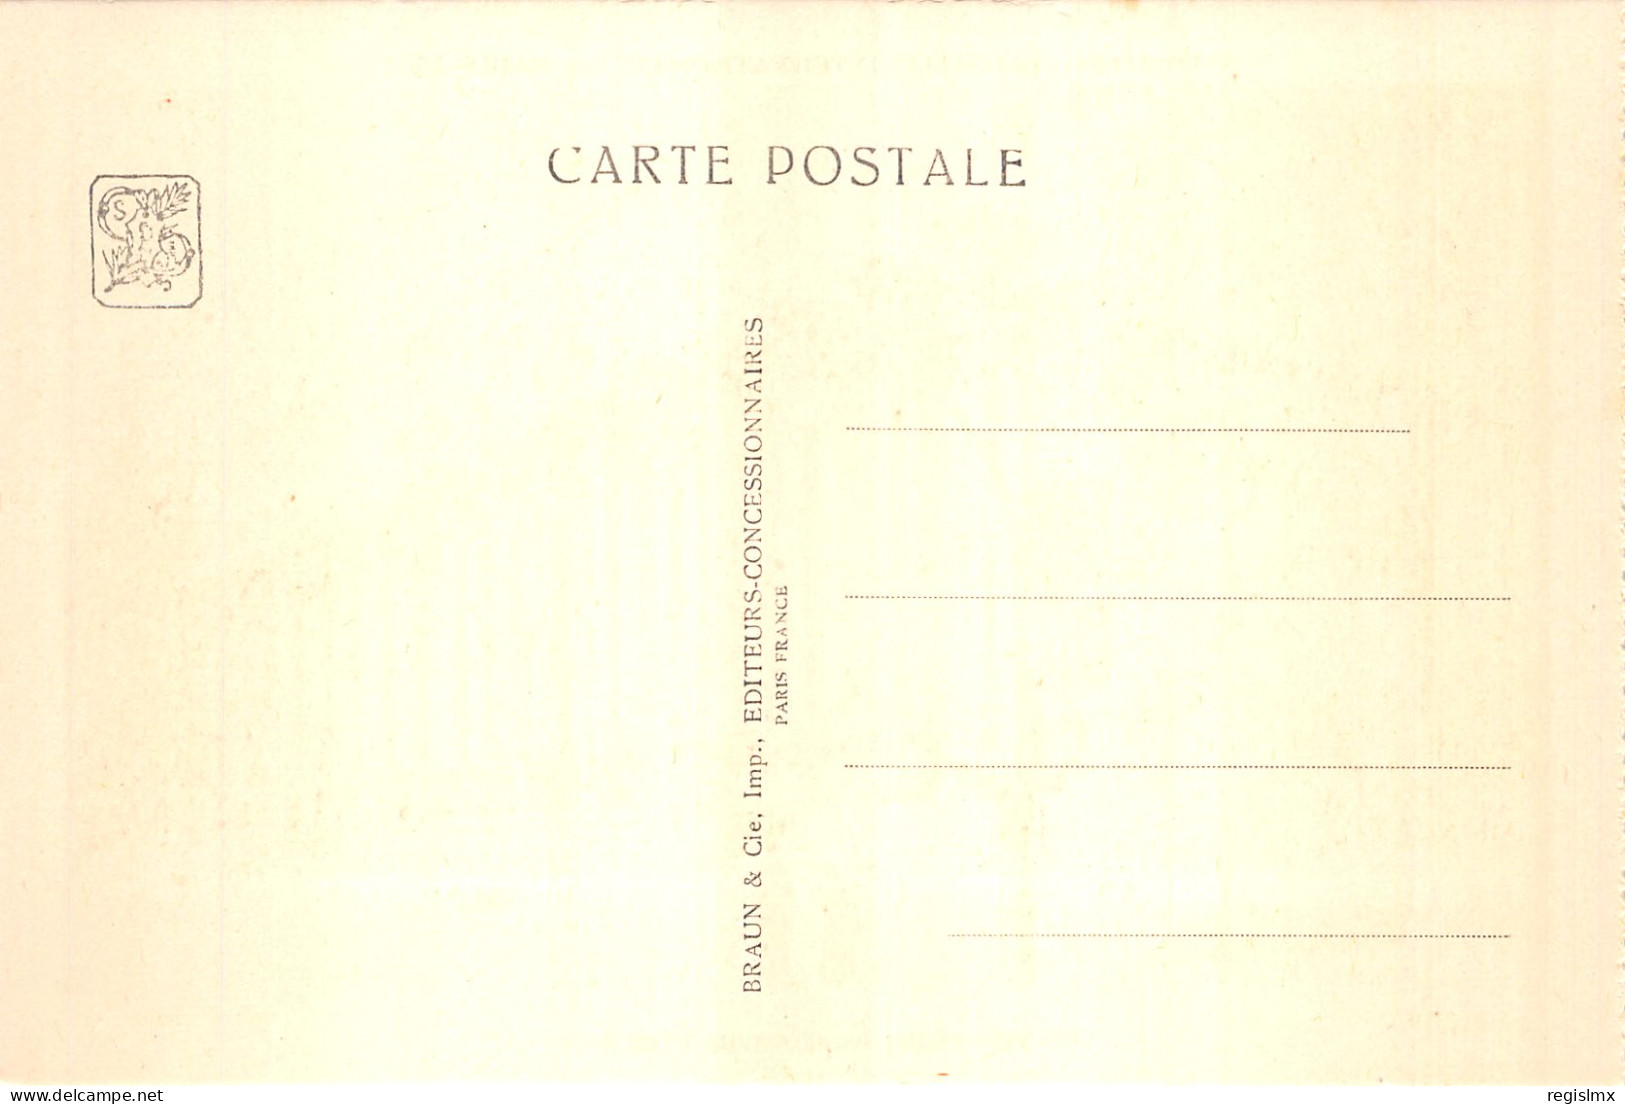 75-PARIS EXPOSTITION COLONIALE INTERNATIONALE 1931 CAMEROUN TOGO-N°T1054-H/0203 - Exhibitions